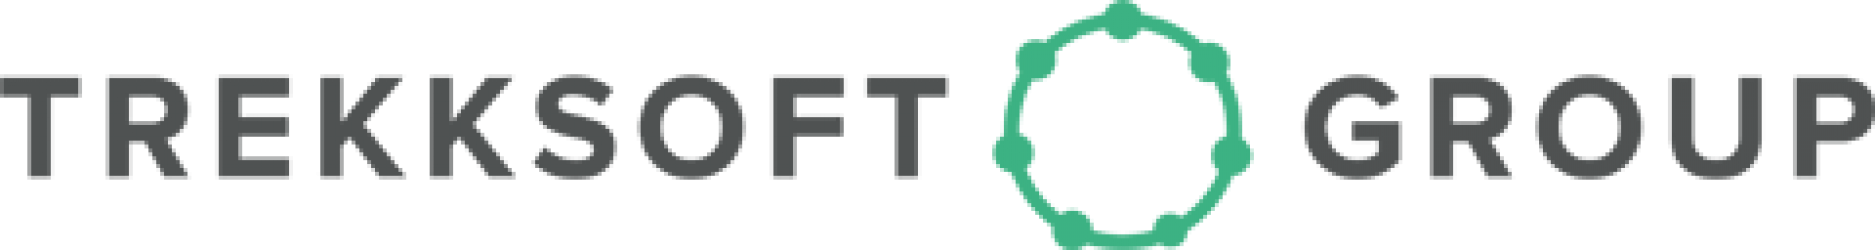 cropped-wordpress-logo.png – TrekkSoft Group